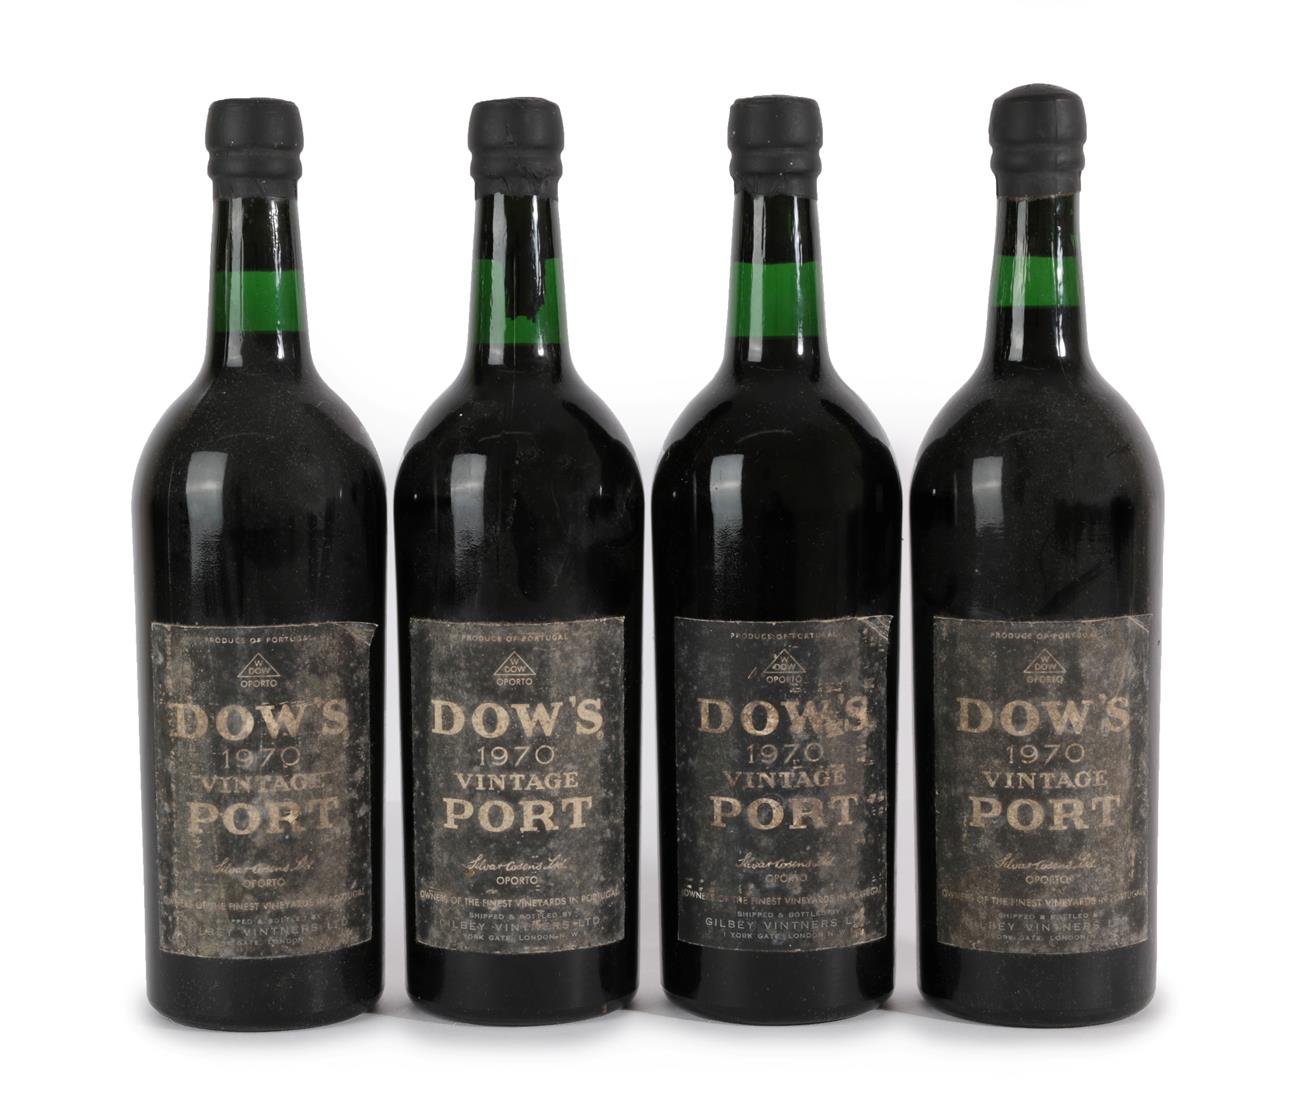 Dow's 1970 Vintage Port (four bottles)